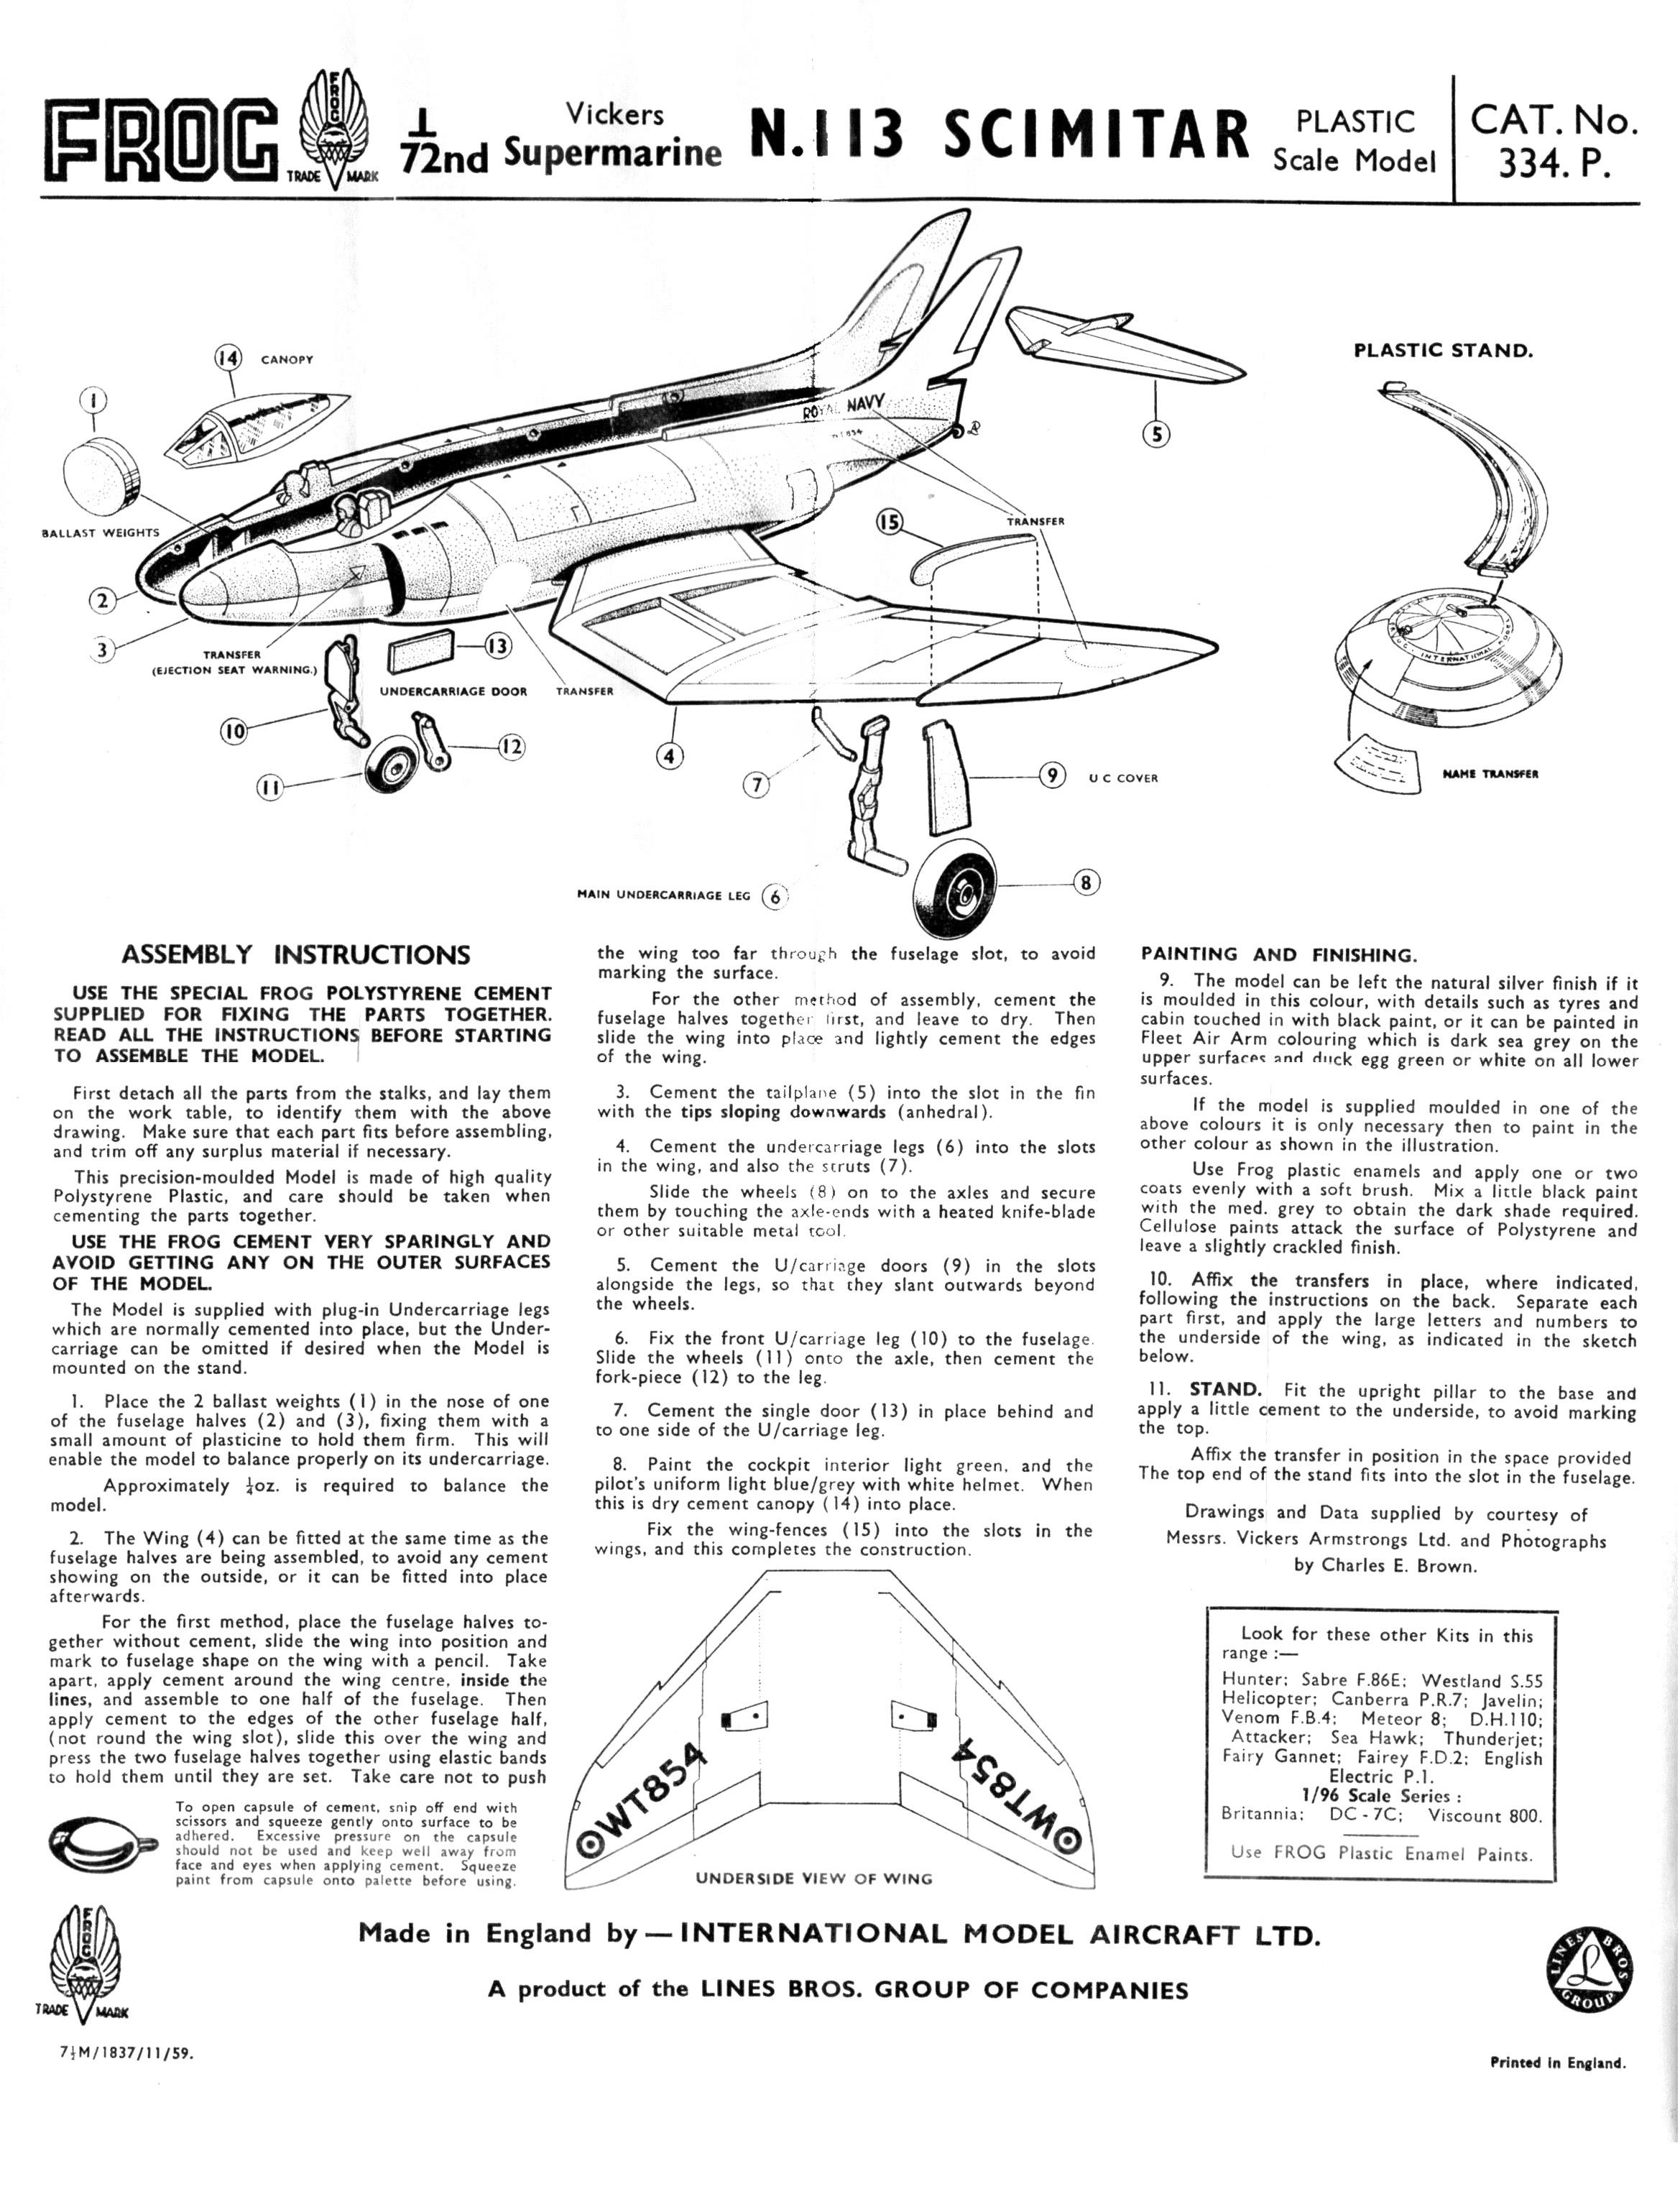 Инструкция по сборке FROG 334P Supermarine N.113, International Model Aircraft Limited, 1957